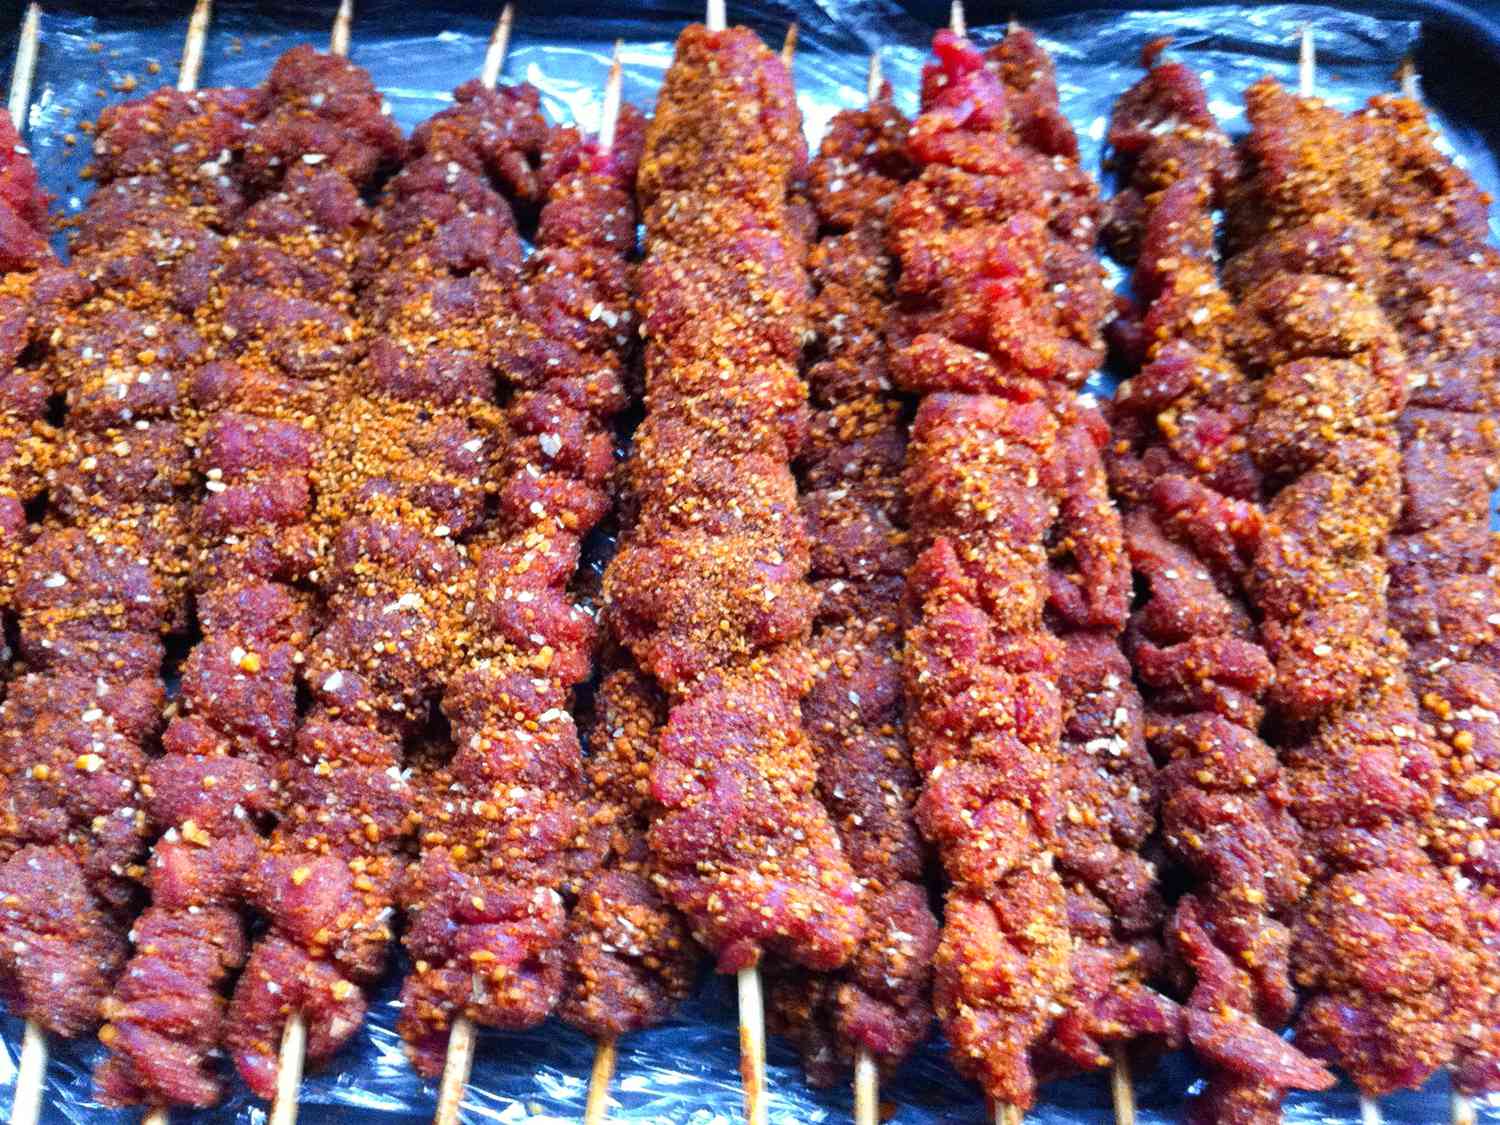 Close up view of seasoned meat on skewers for Nigerian Suya